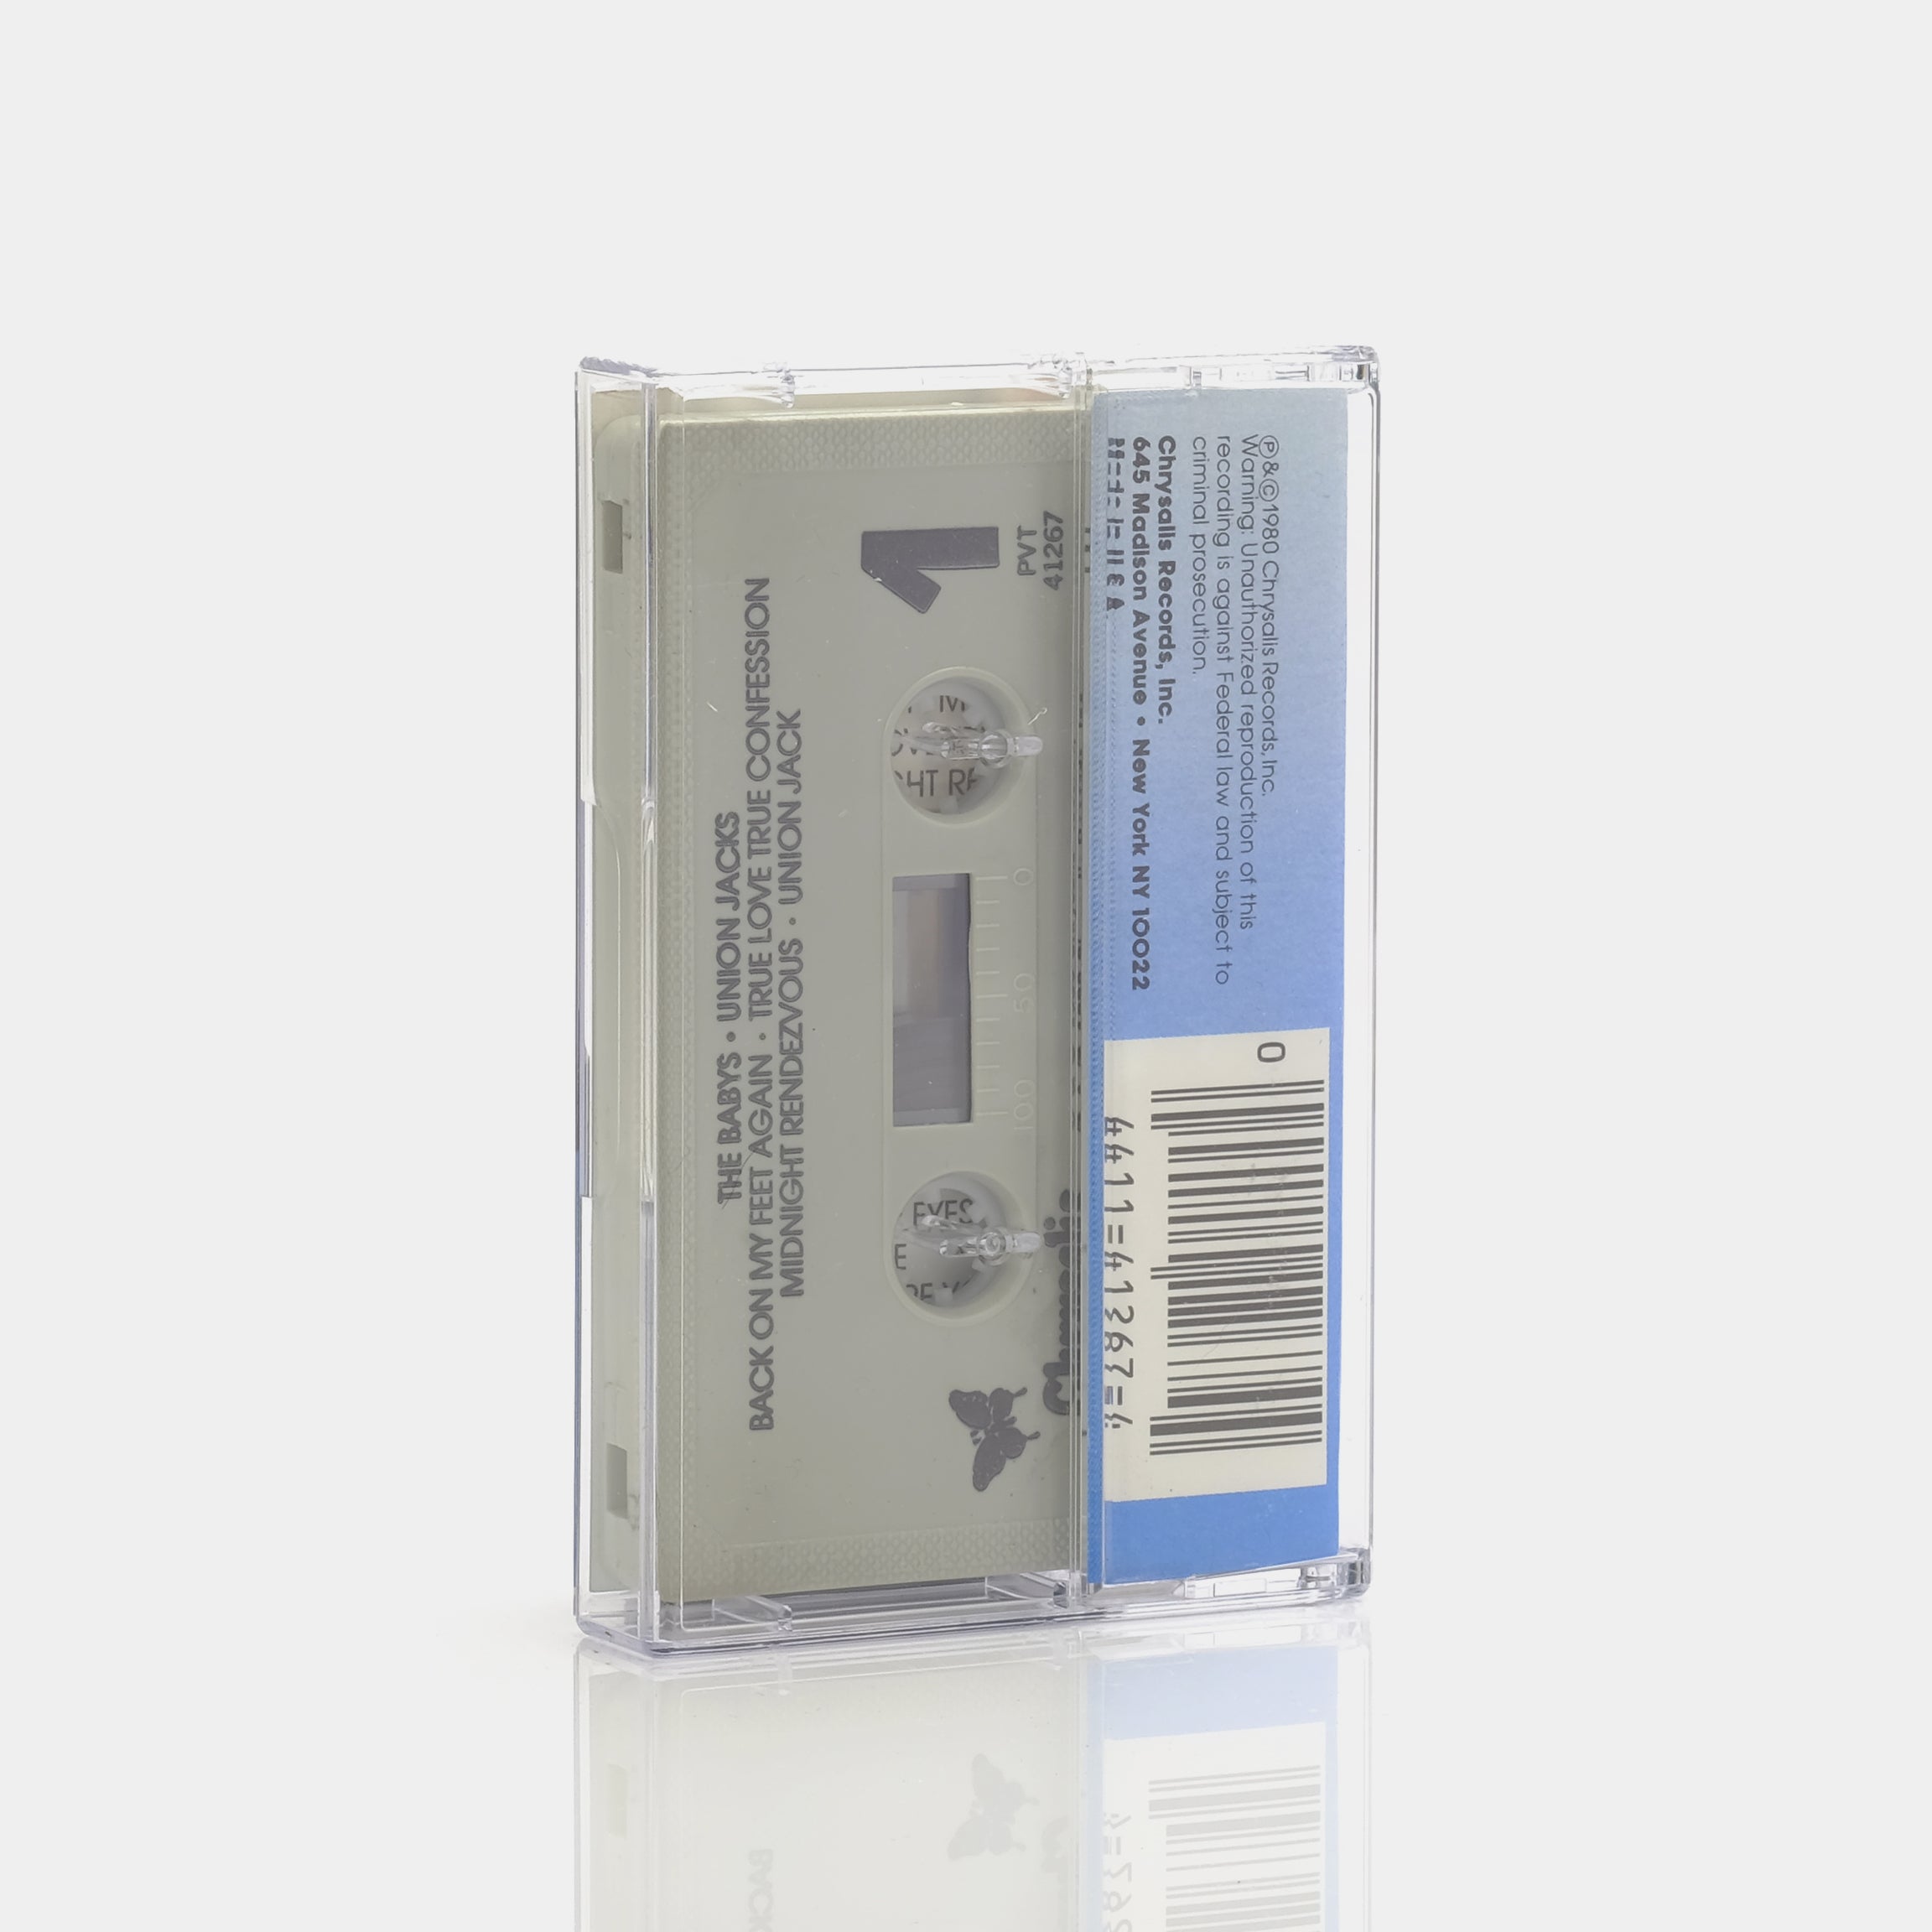 The Babys - Union Jacks Cassette Tape